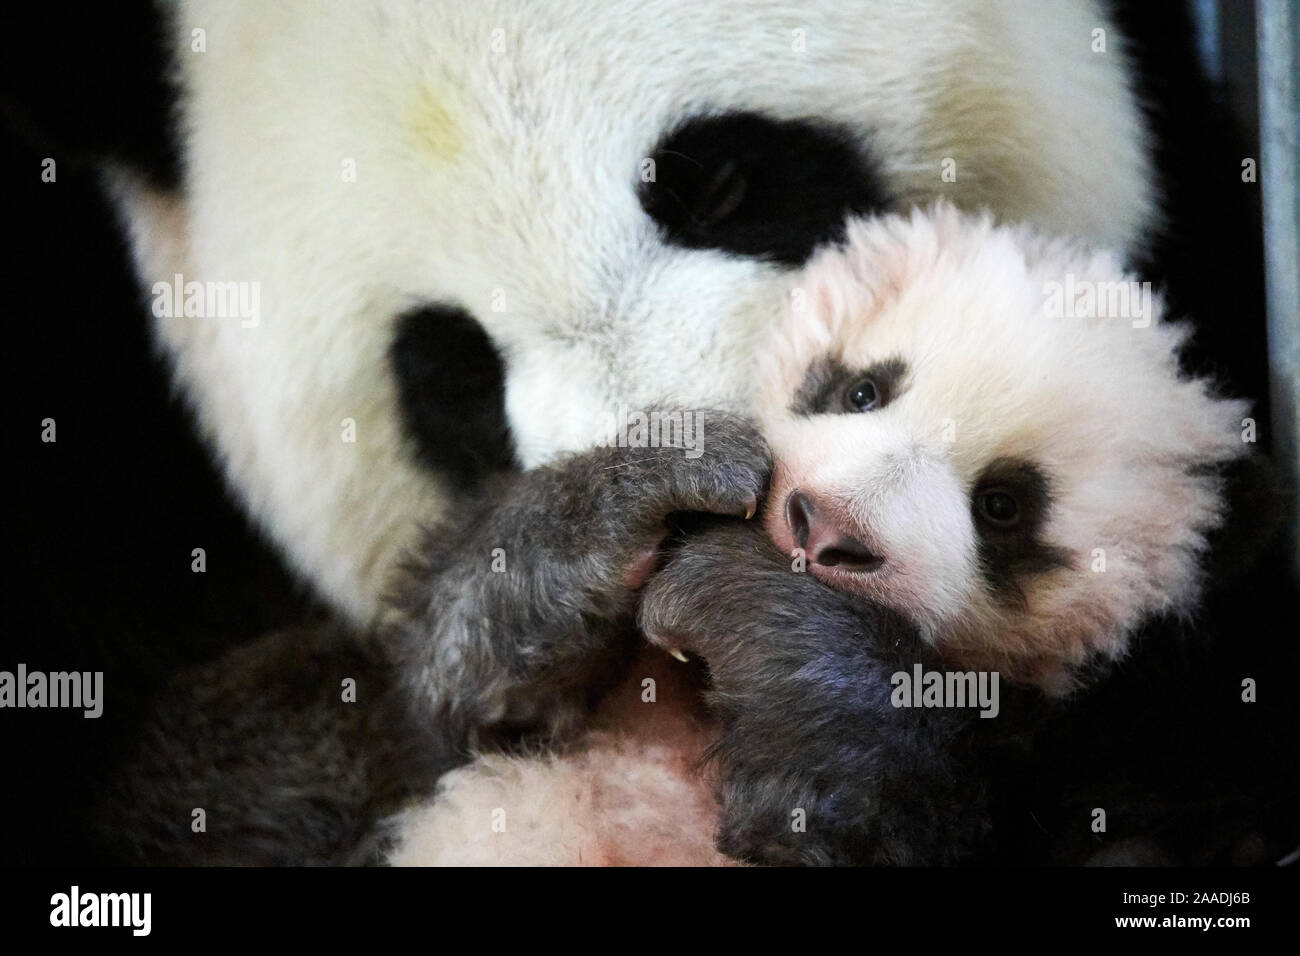 Giant panda (Ailuropoda melanoleuca) female, Huan Huan, holding baby age three months, Beauval Zoo, France, November 2017. Stock Photo